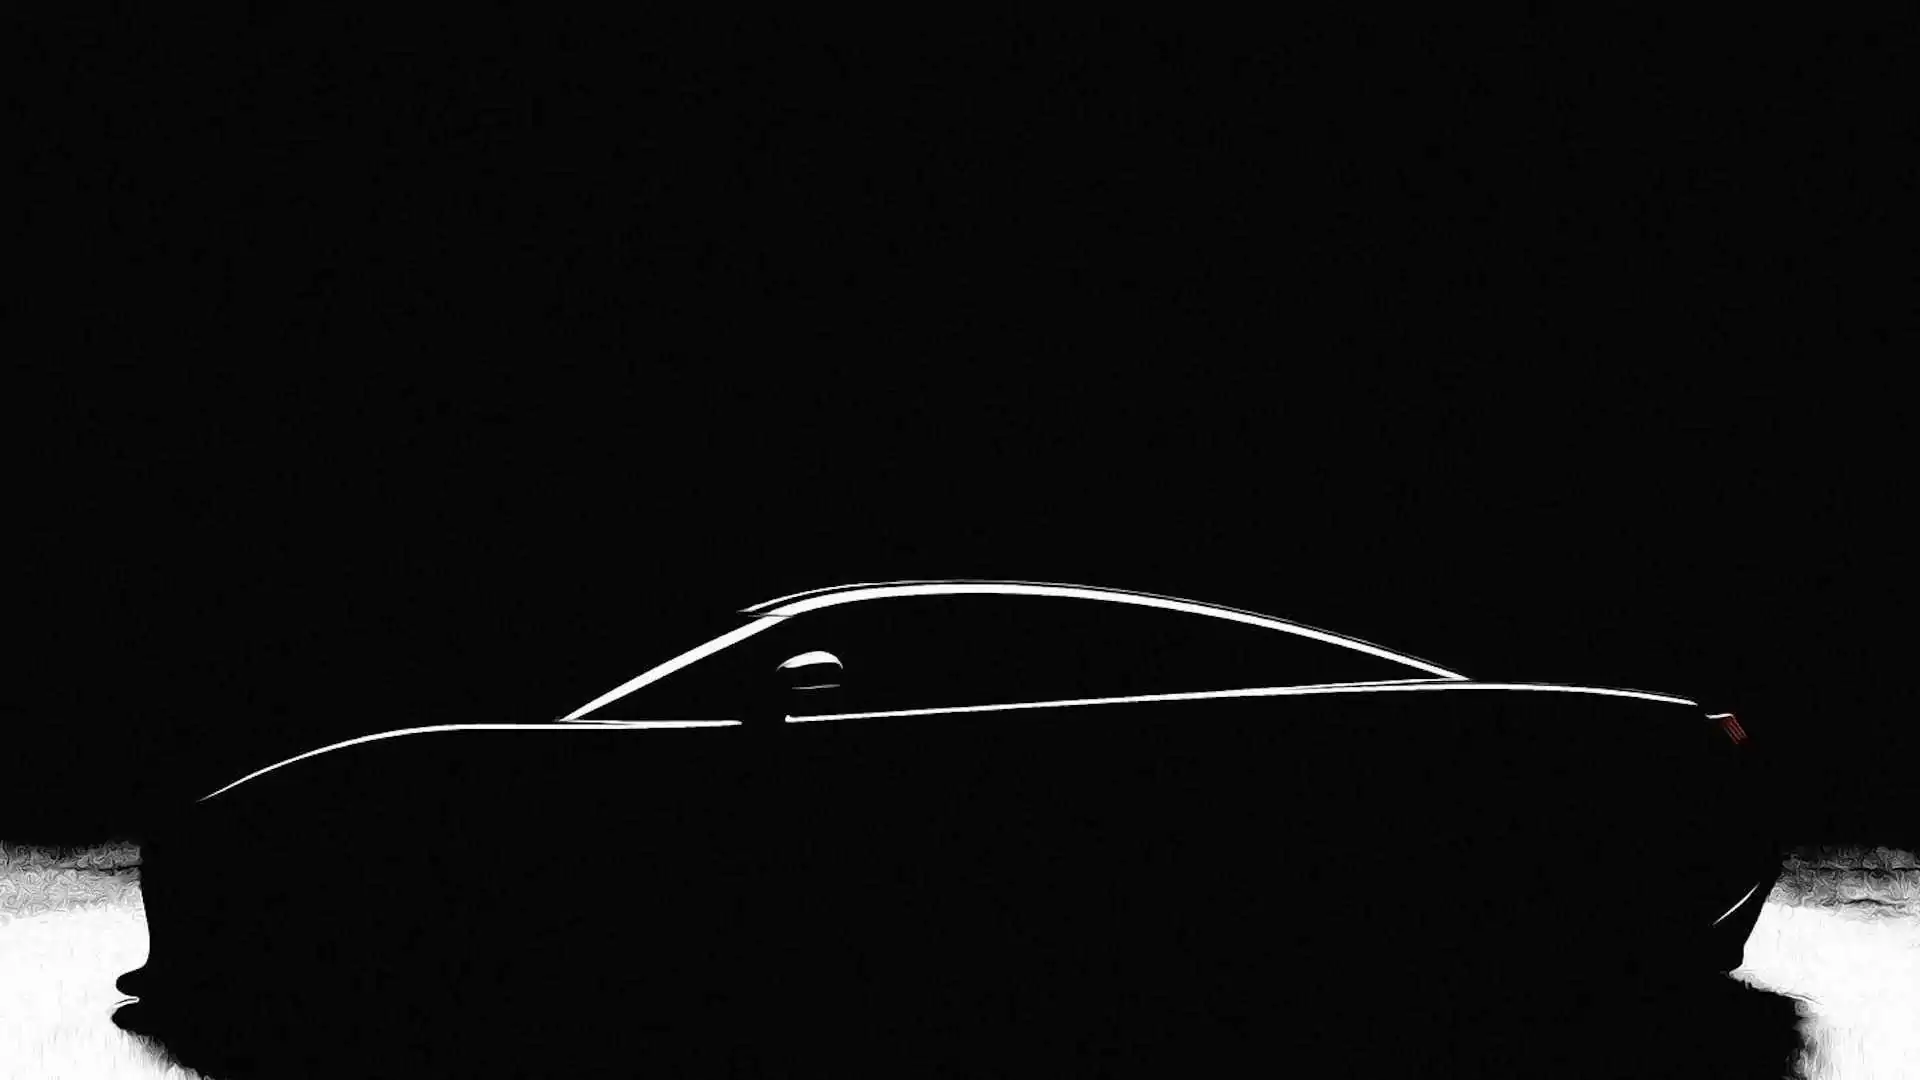 New Model Coming By Koenigsegg